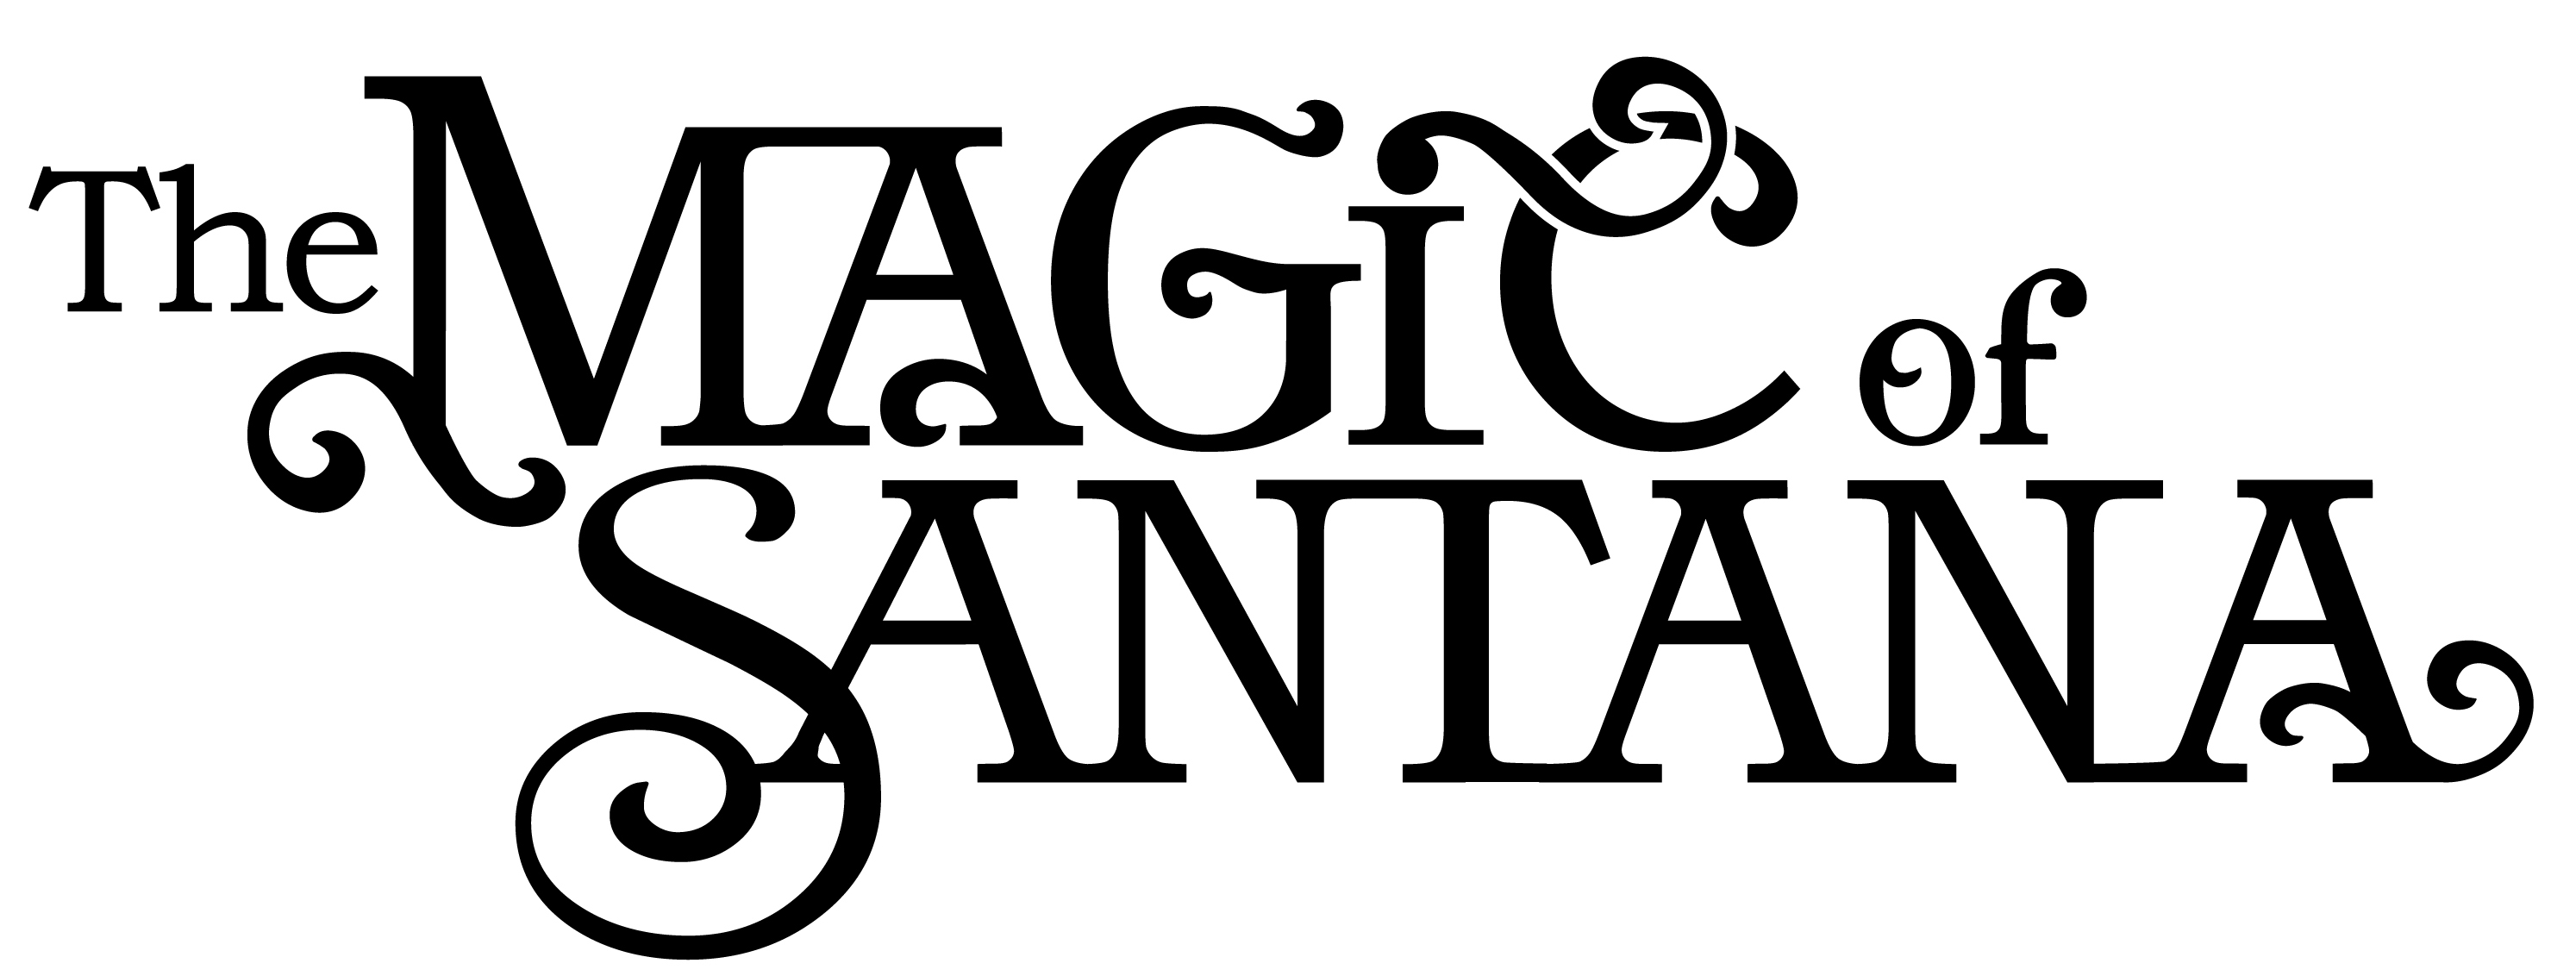 The Magic of Santana - Logo